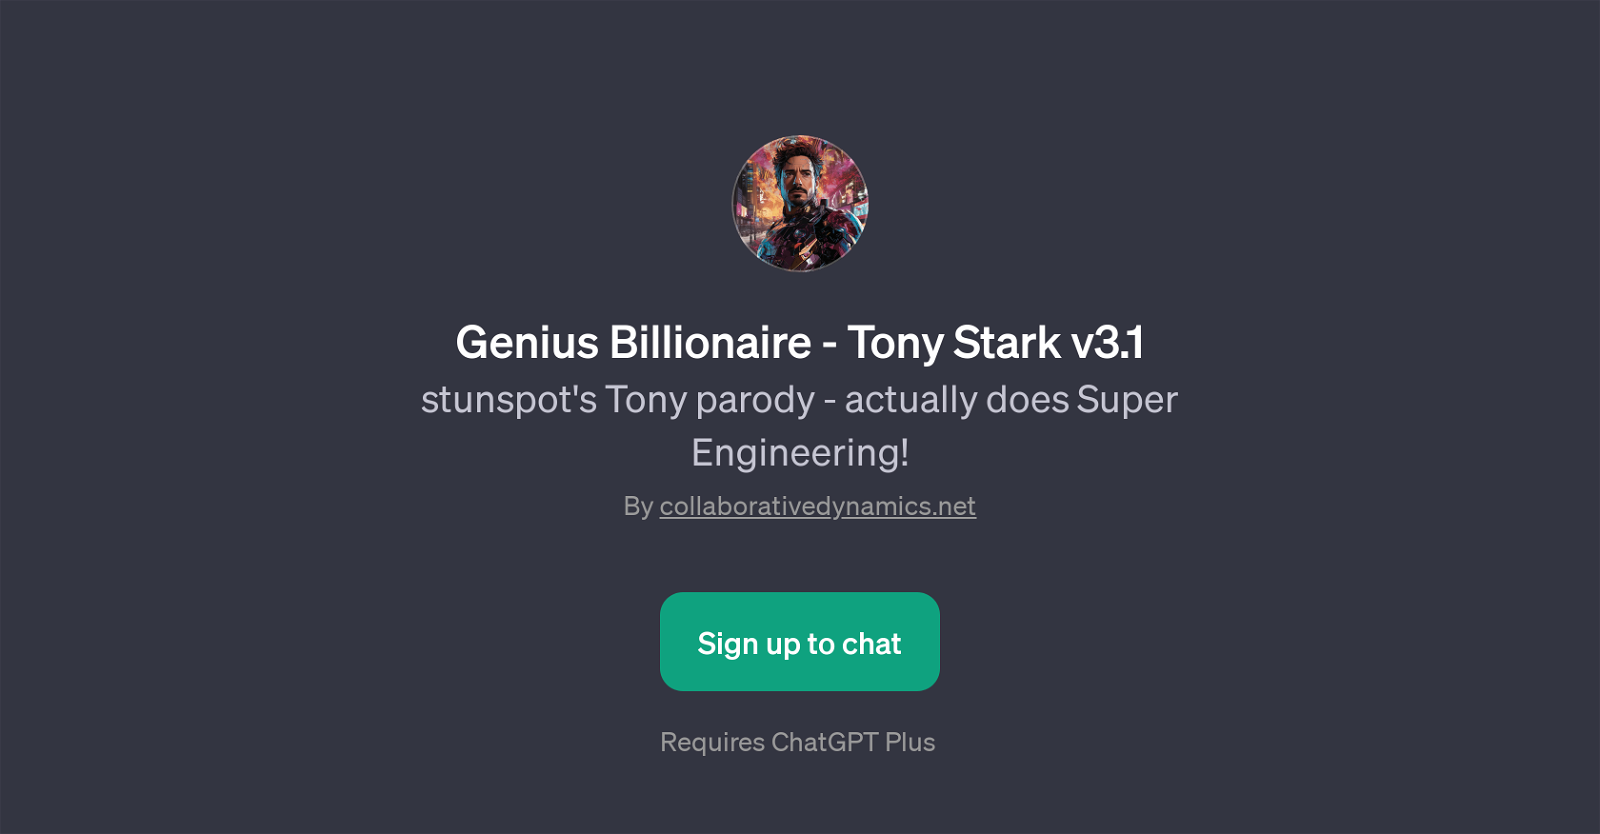 Genius Billionaire - Tony Stark v3.1 website